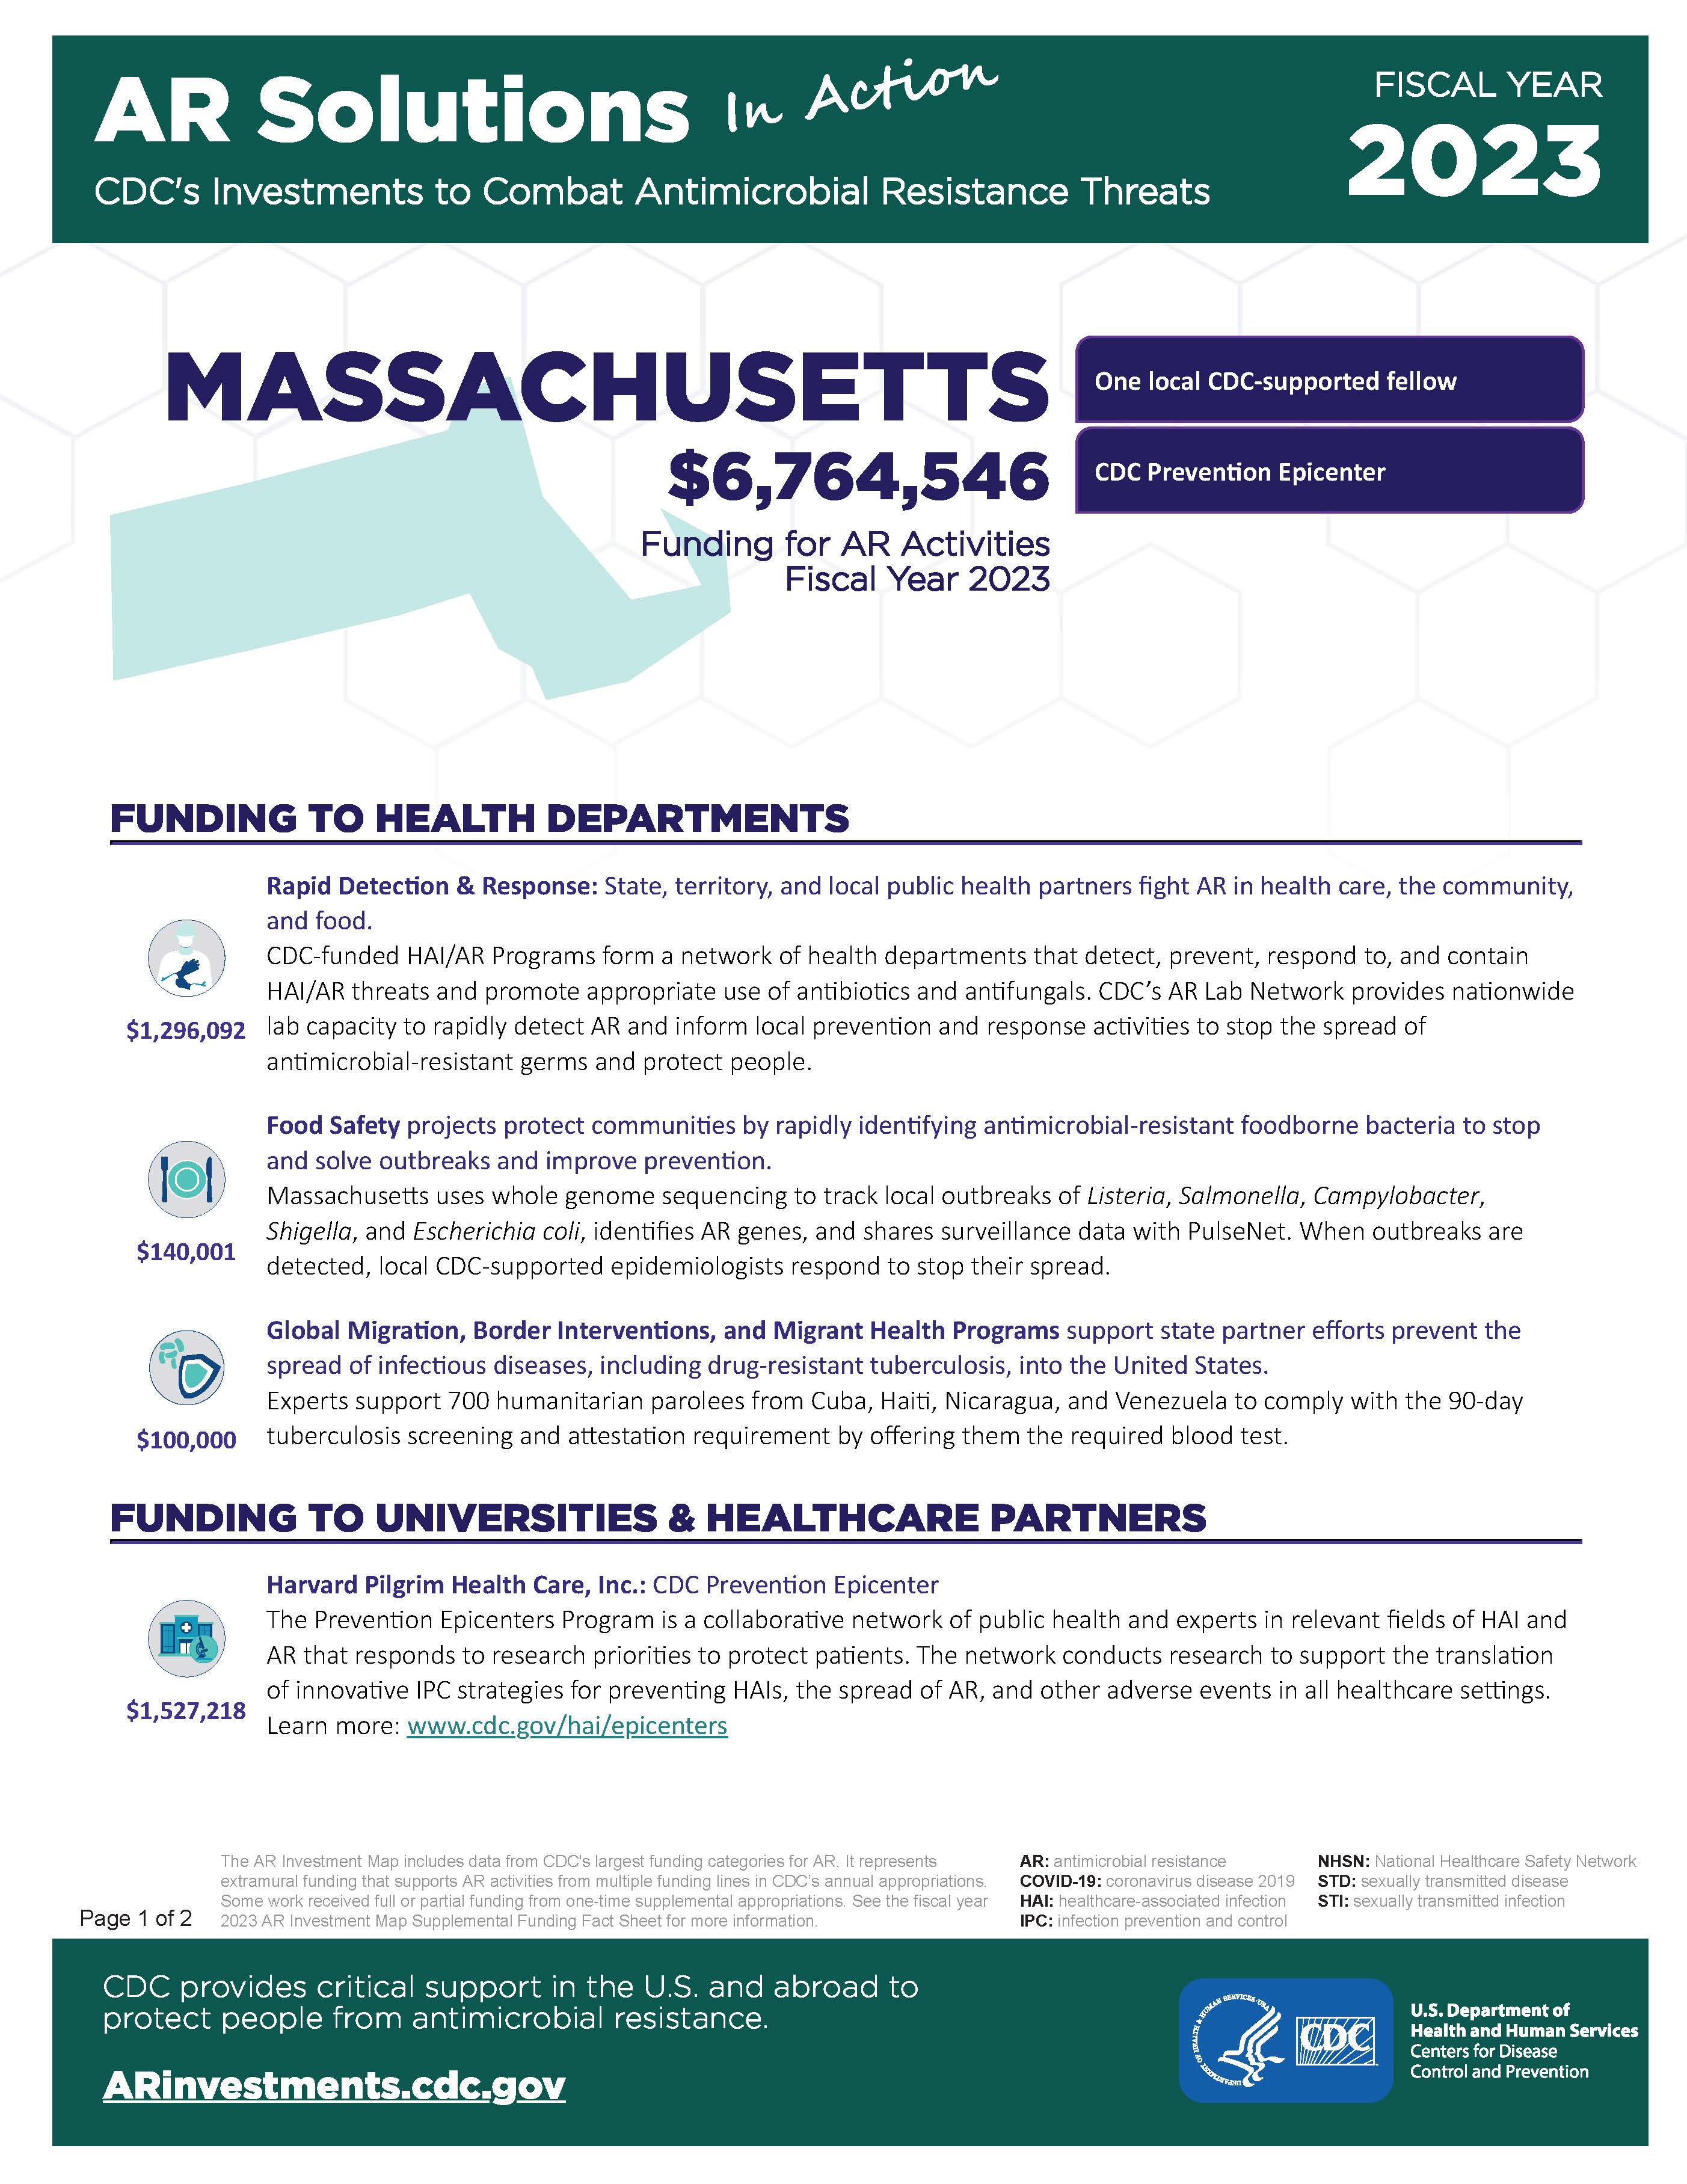 View Factsheet for Massachusetts